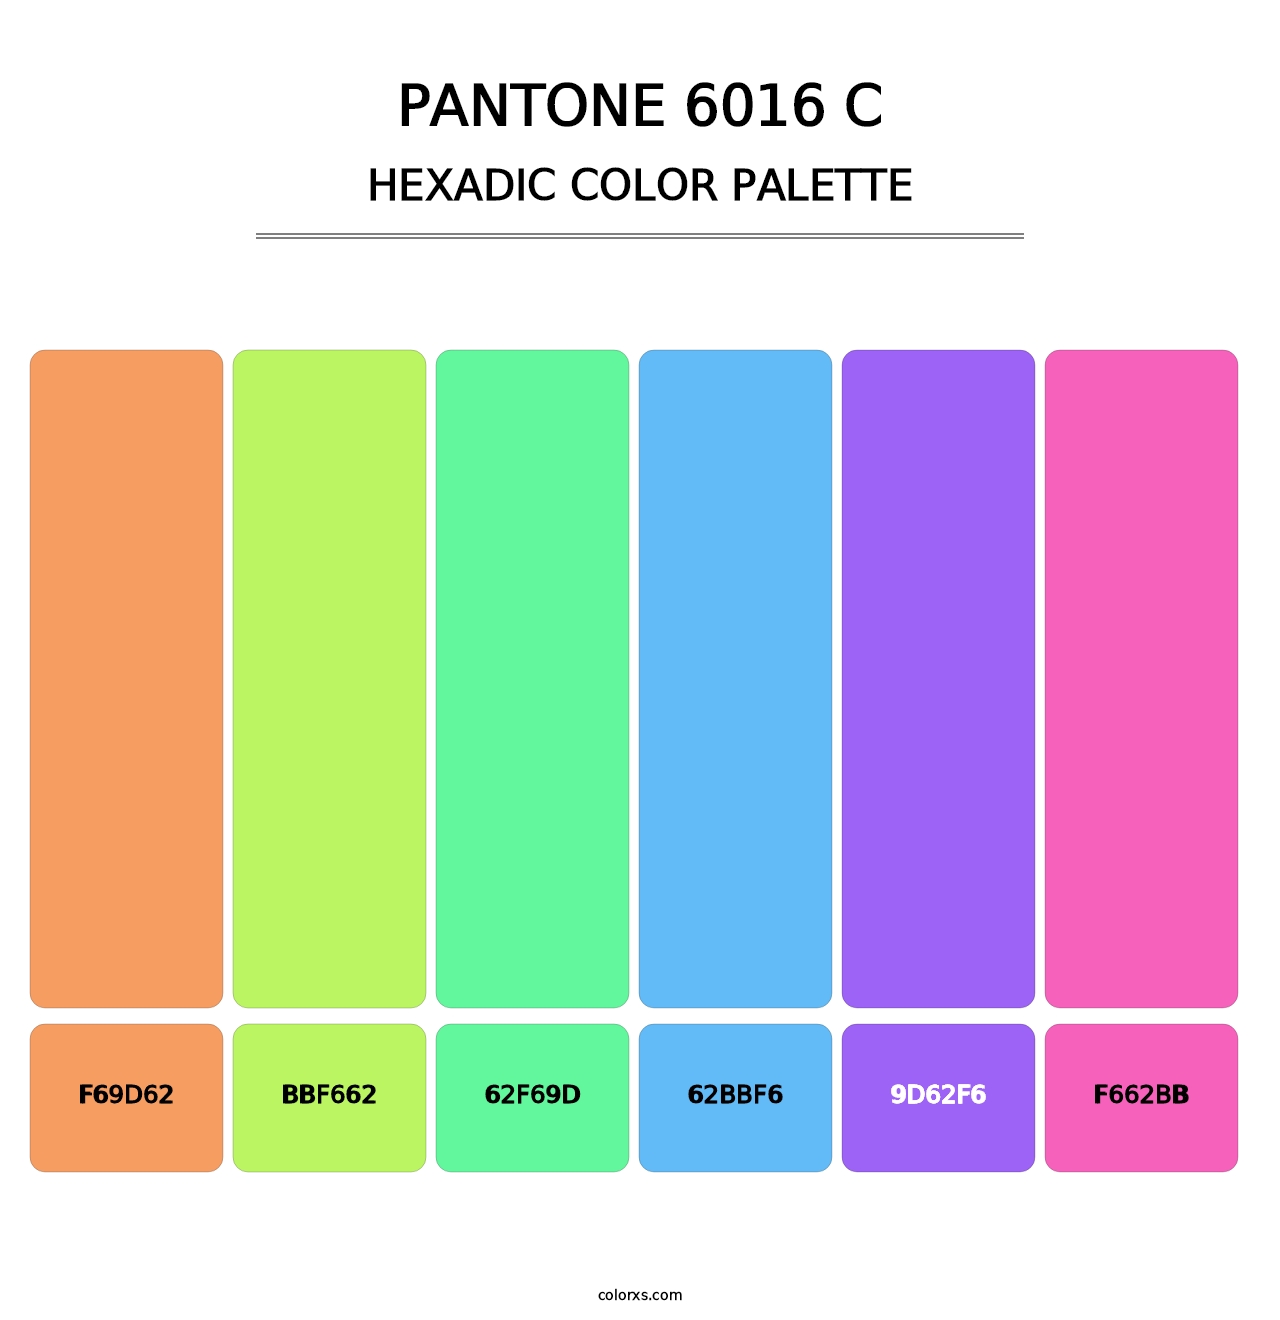 PANTONE 6016 C - Hexadic Color Palette